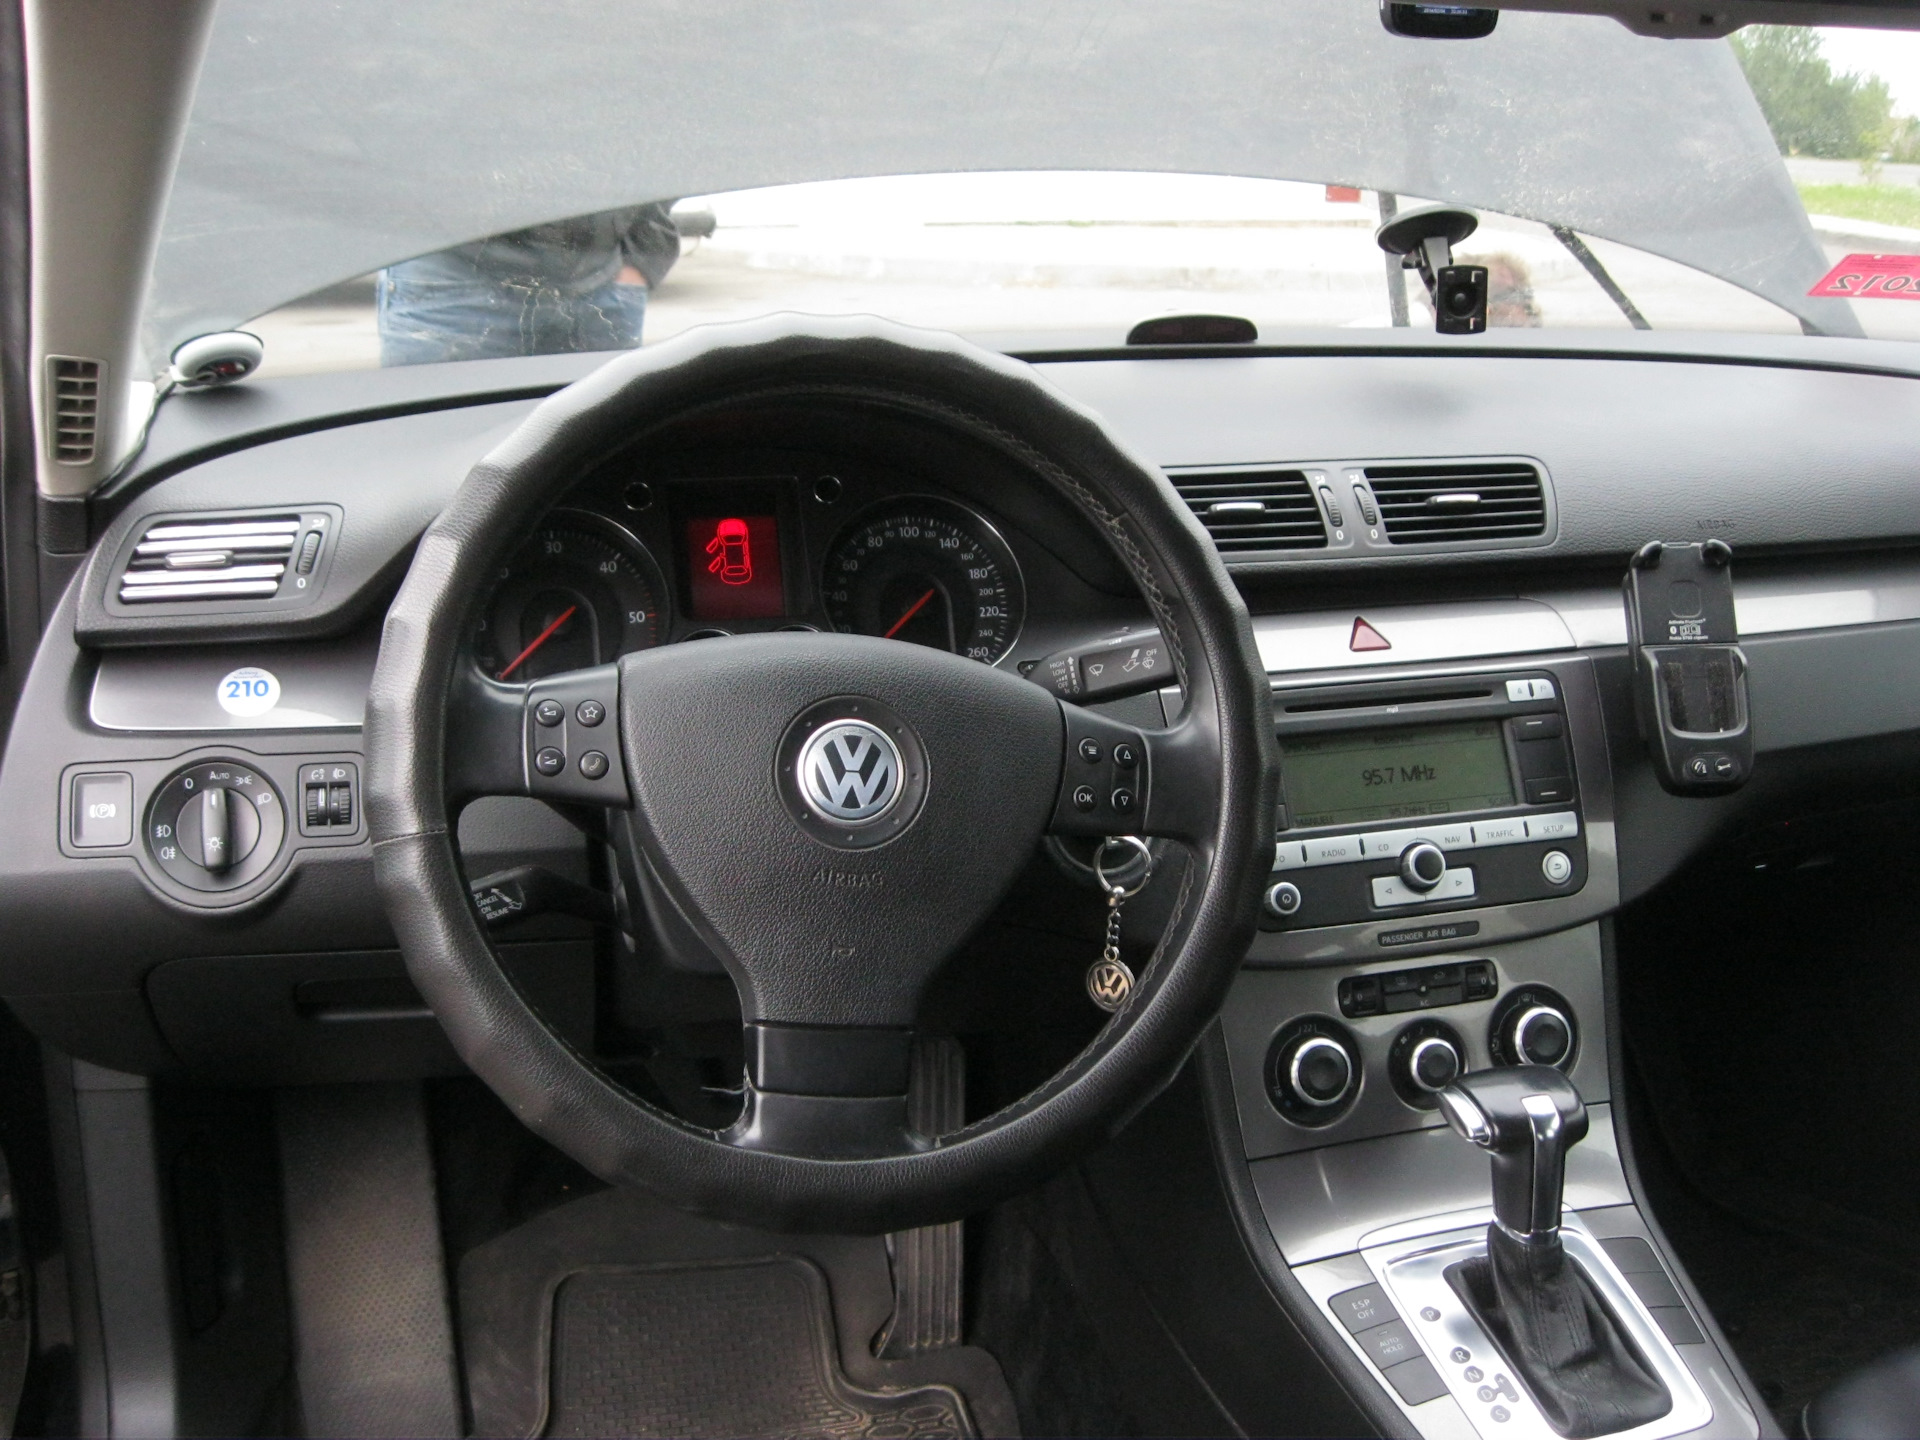 Фольксваген пассат б6 автомат. Volkswagen Passat b6 2.0 TDI 2009. Passat b6 DSG. Passat b6 автомат.